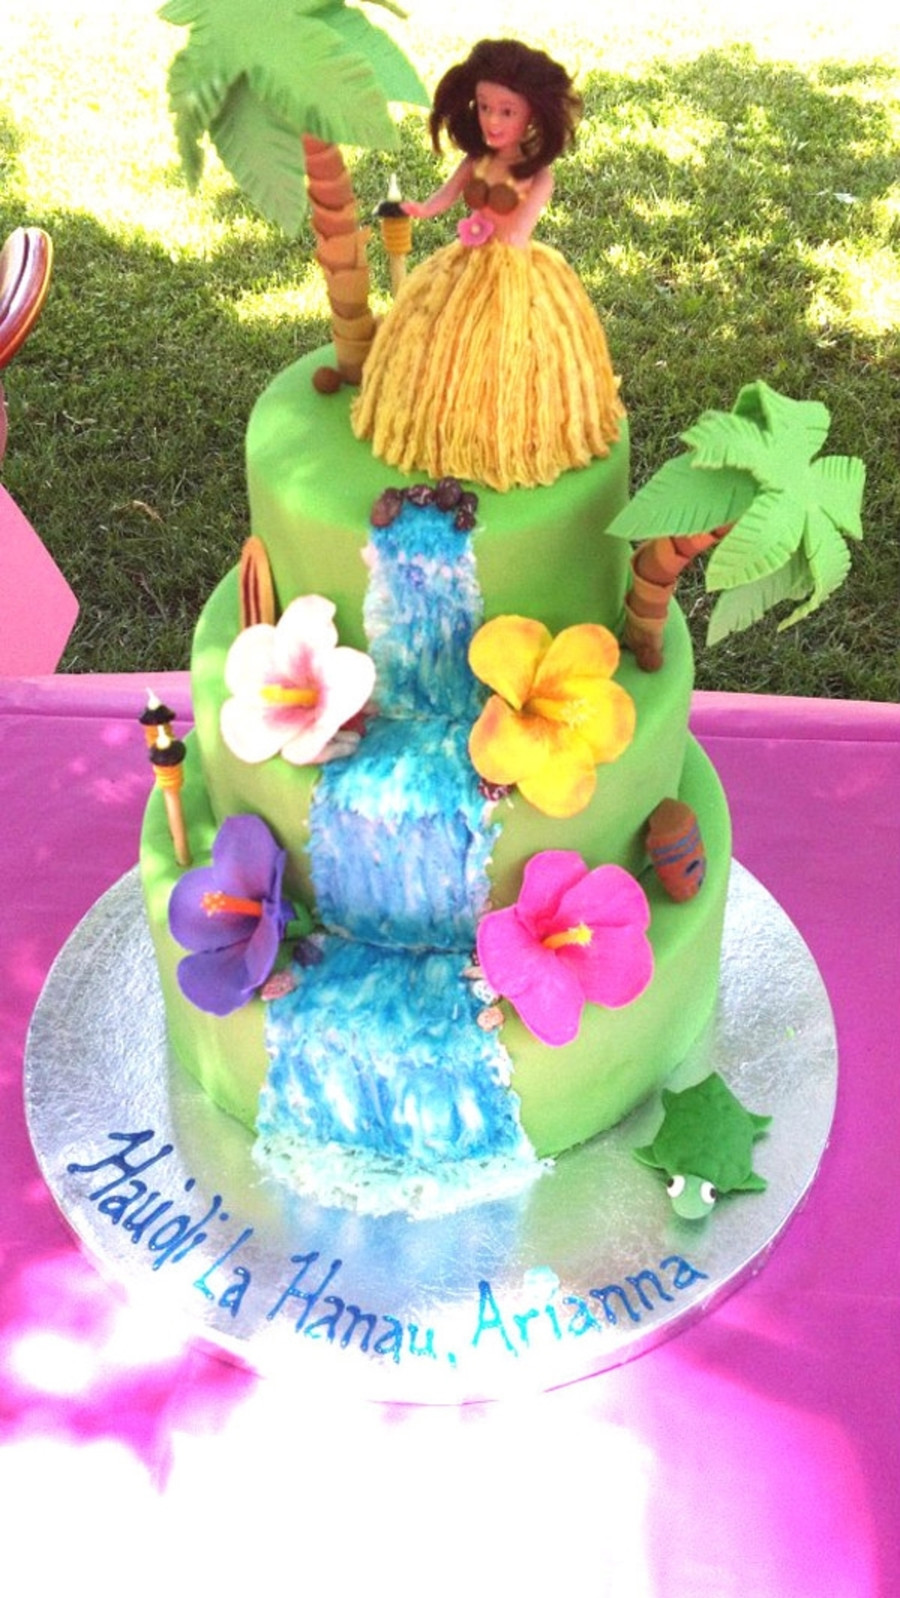 Best ideas about Hawaiian Birthday Cake
. Save or Pin Hawaiian Birthday Cake CakeCentral Now.